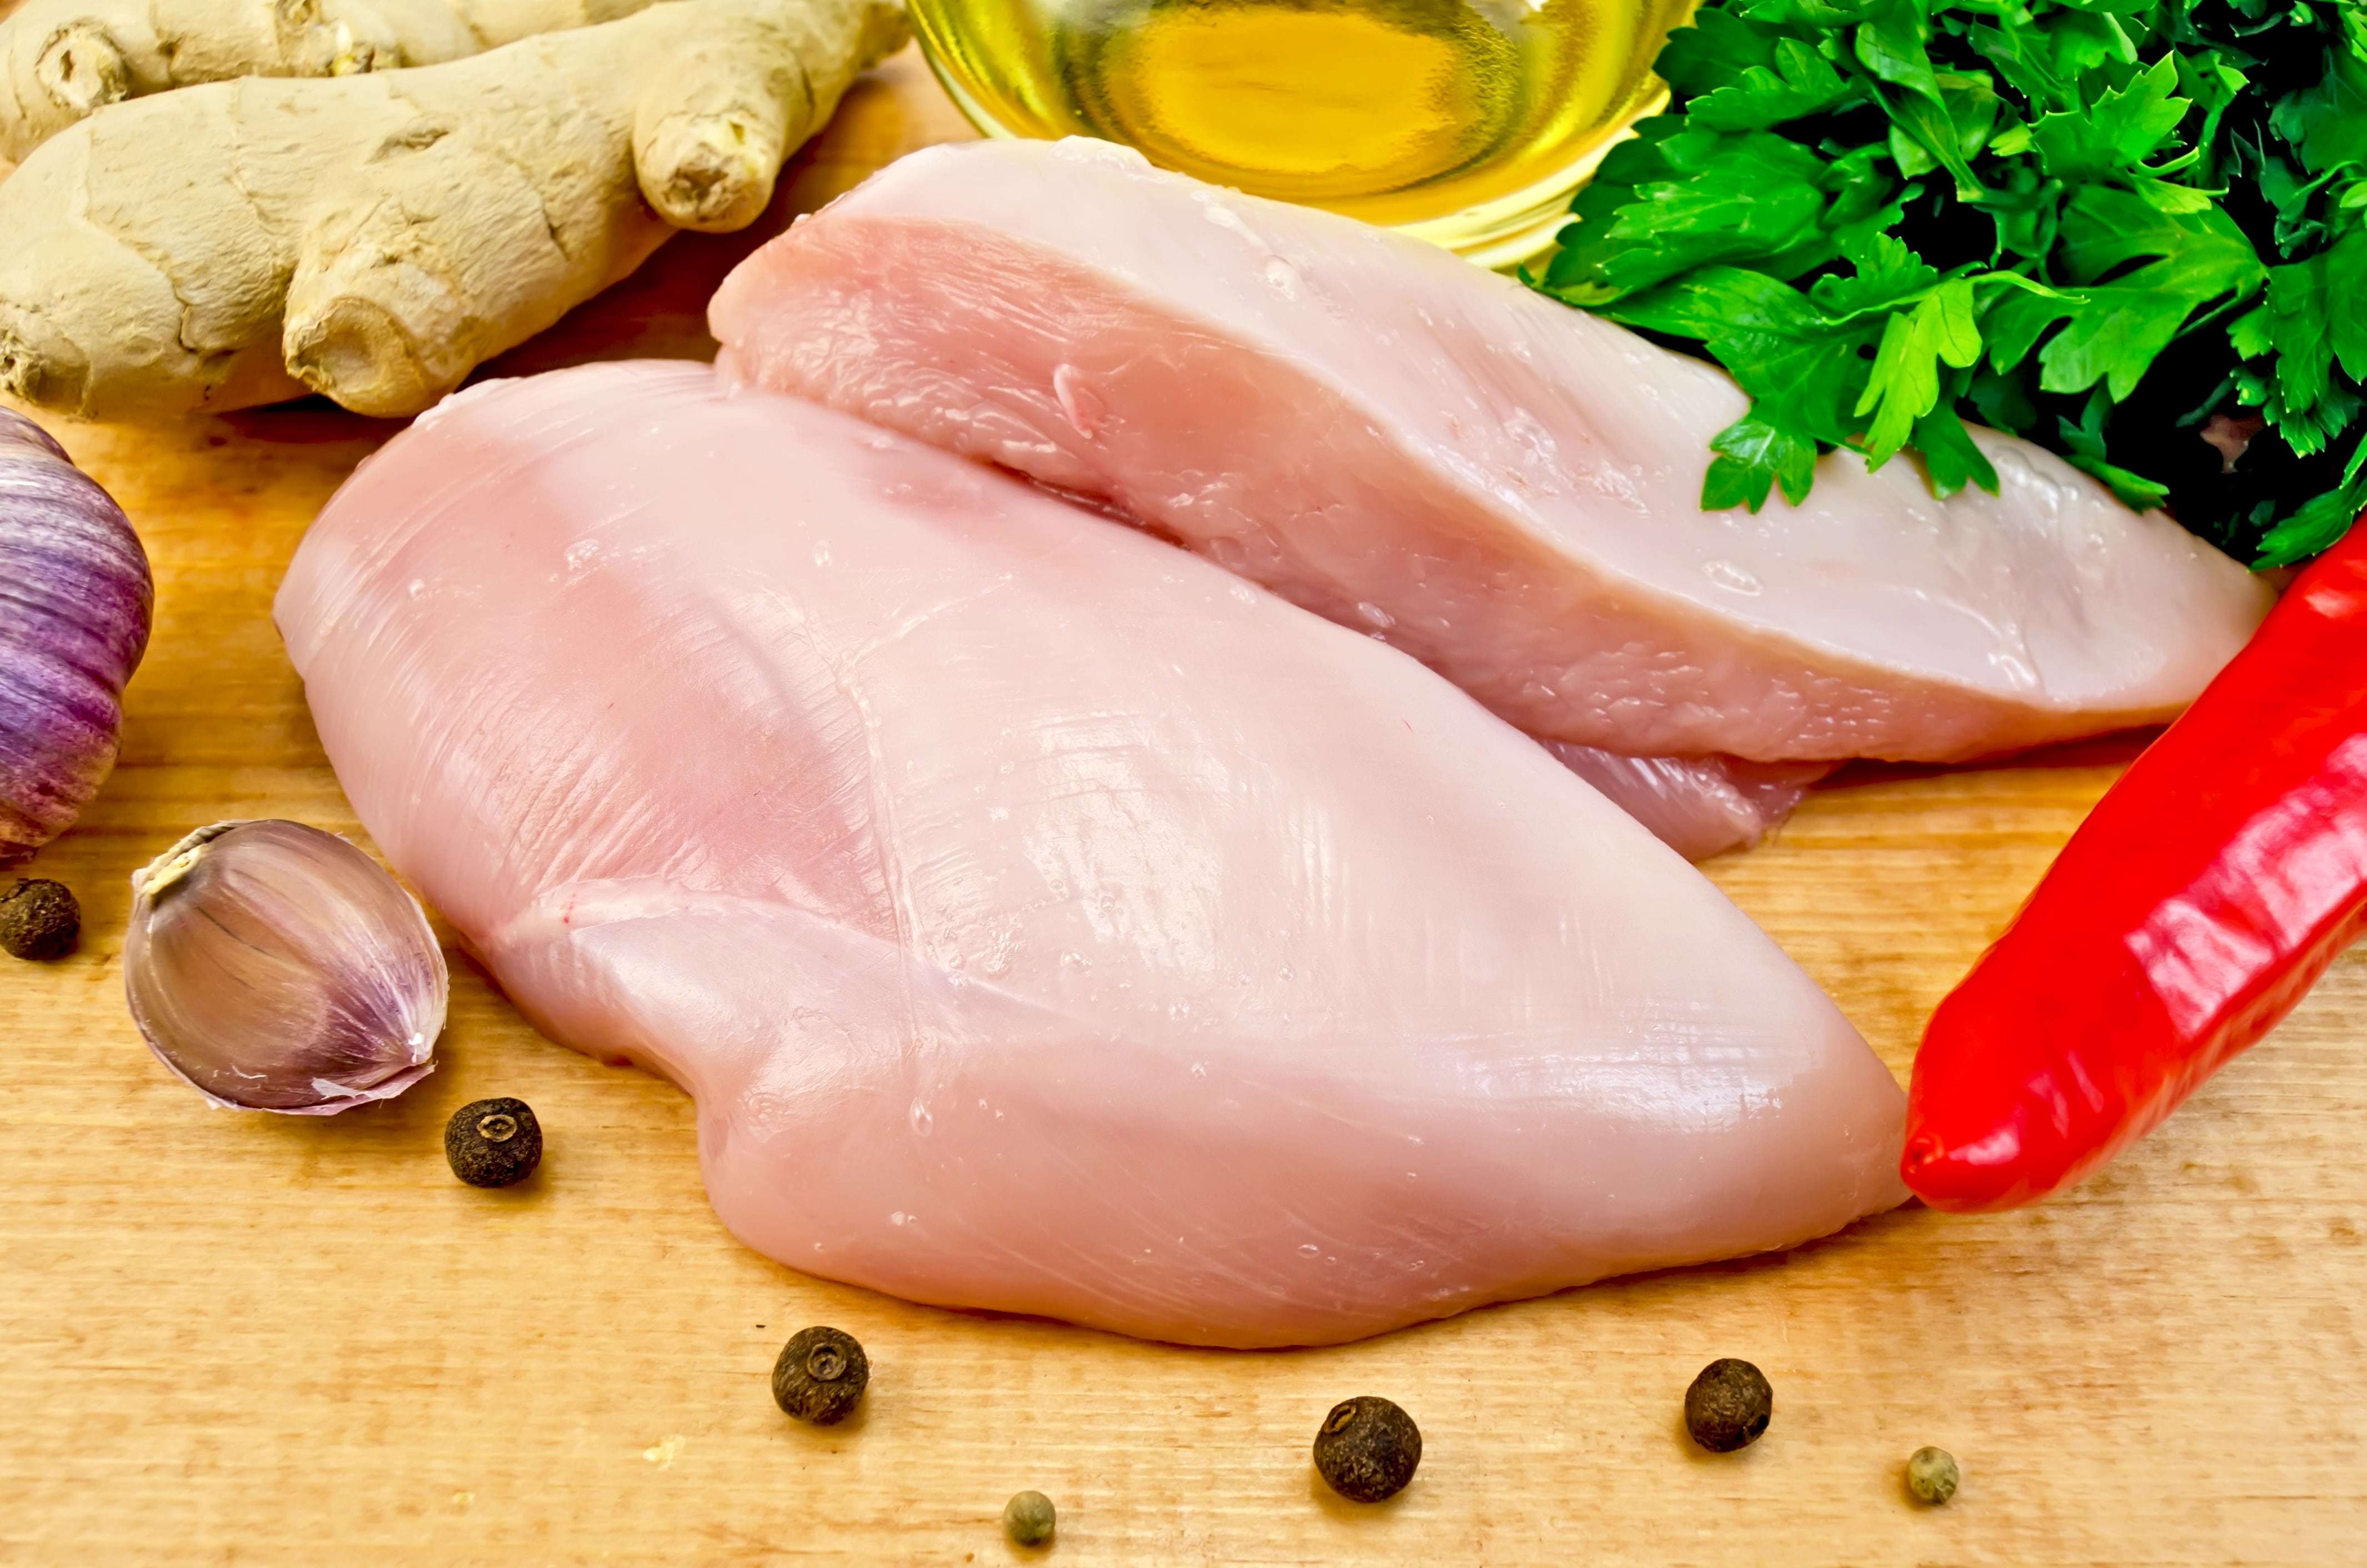 Free Range All Natural Boneless Skinless Chicken Breast